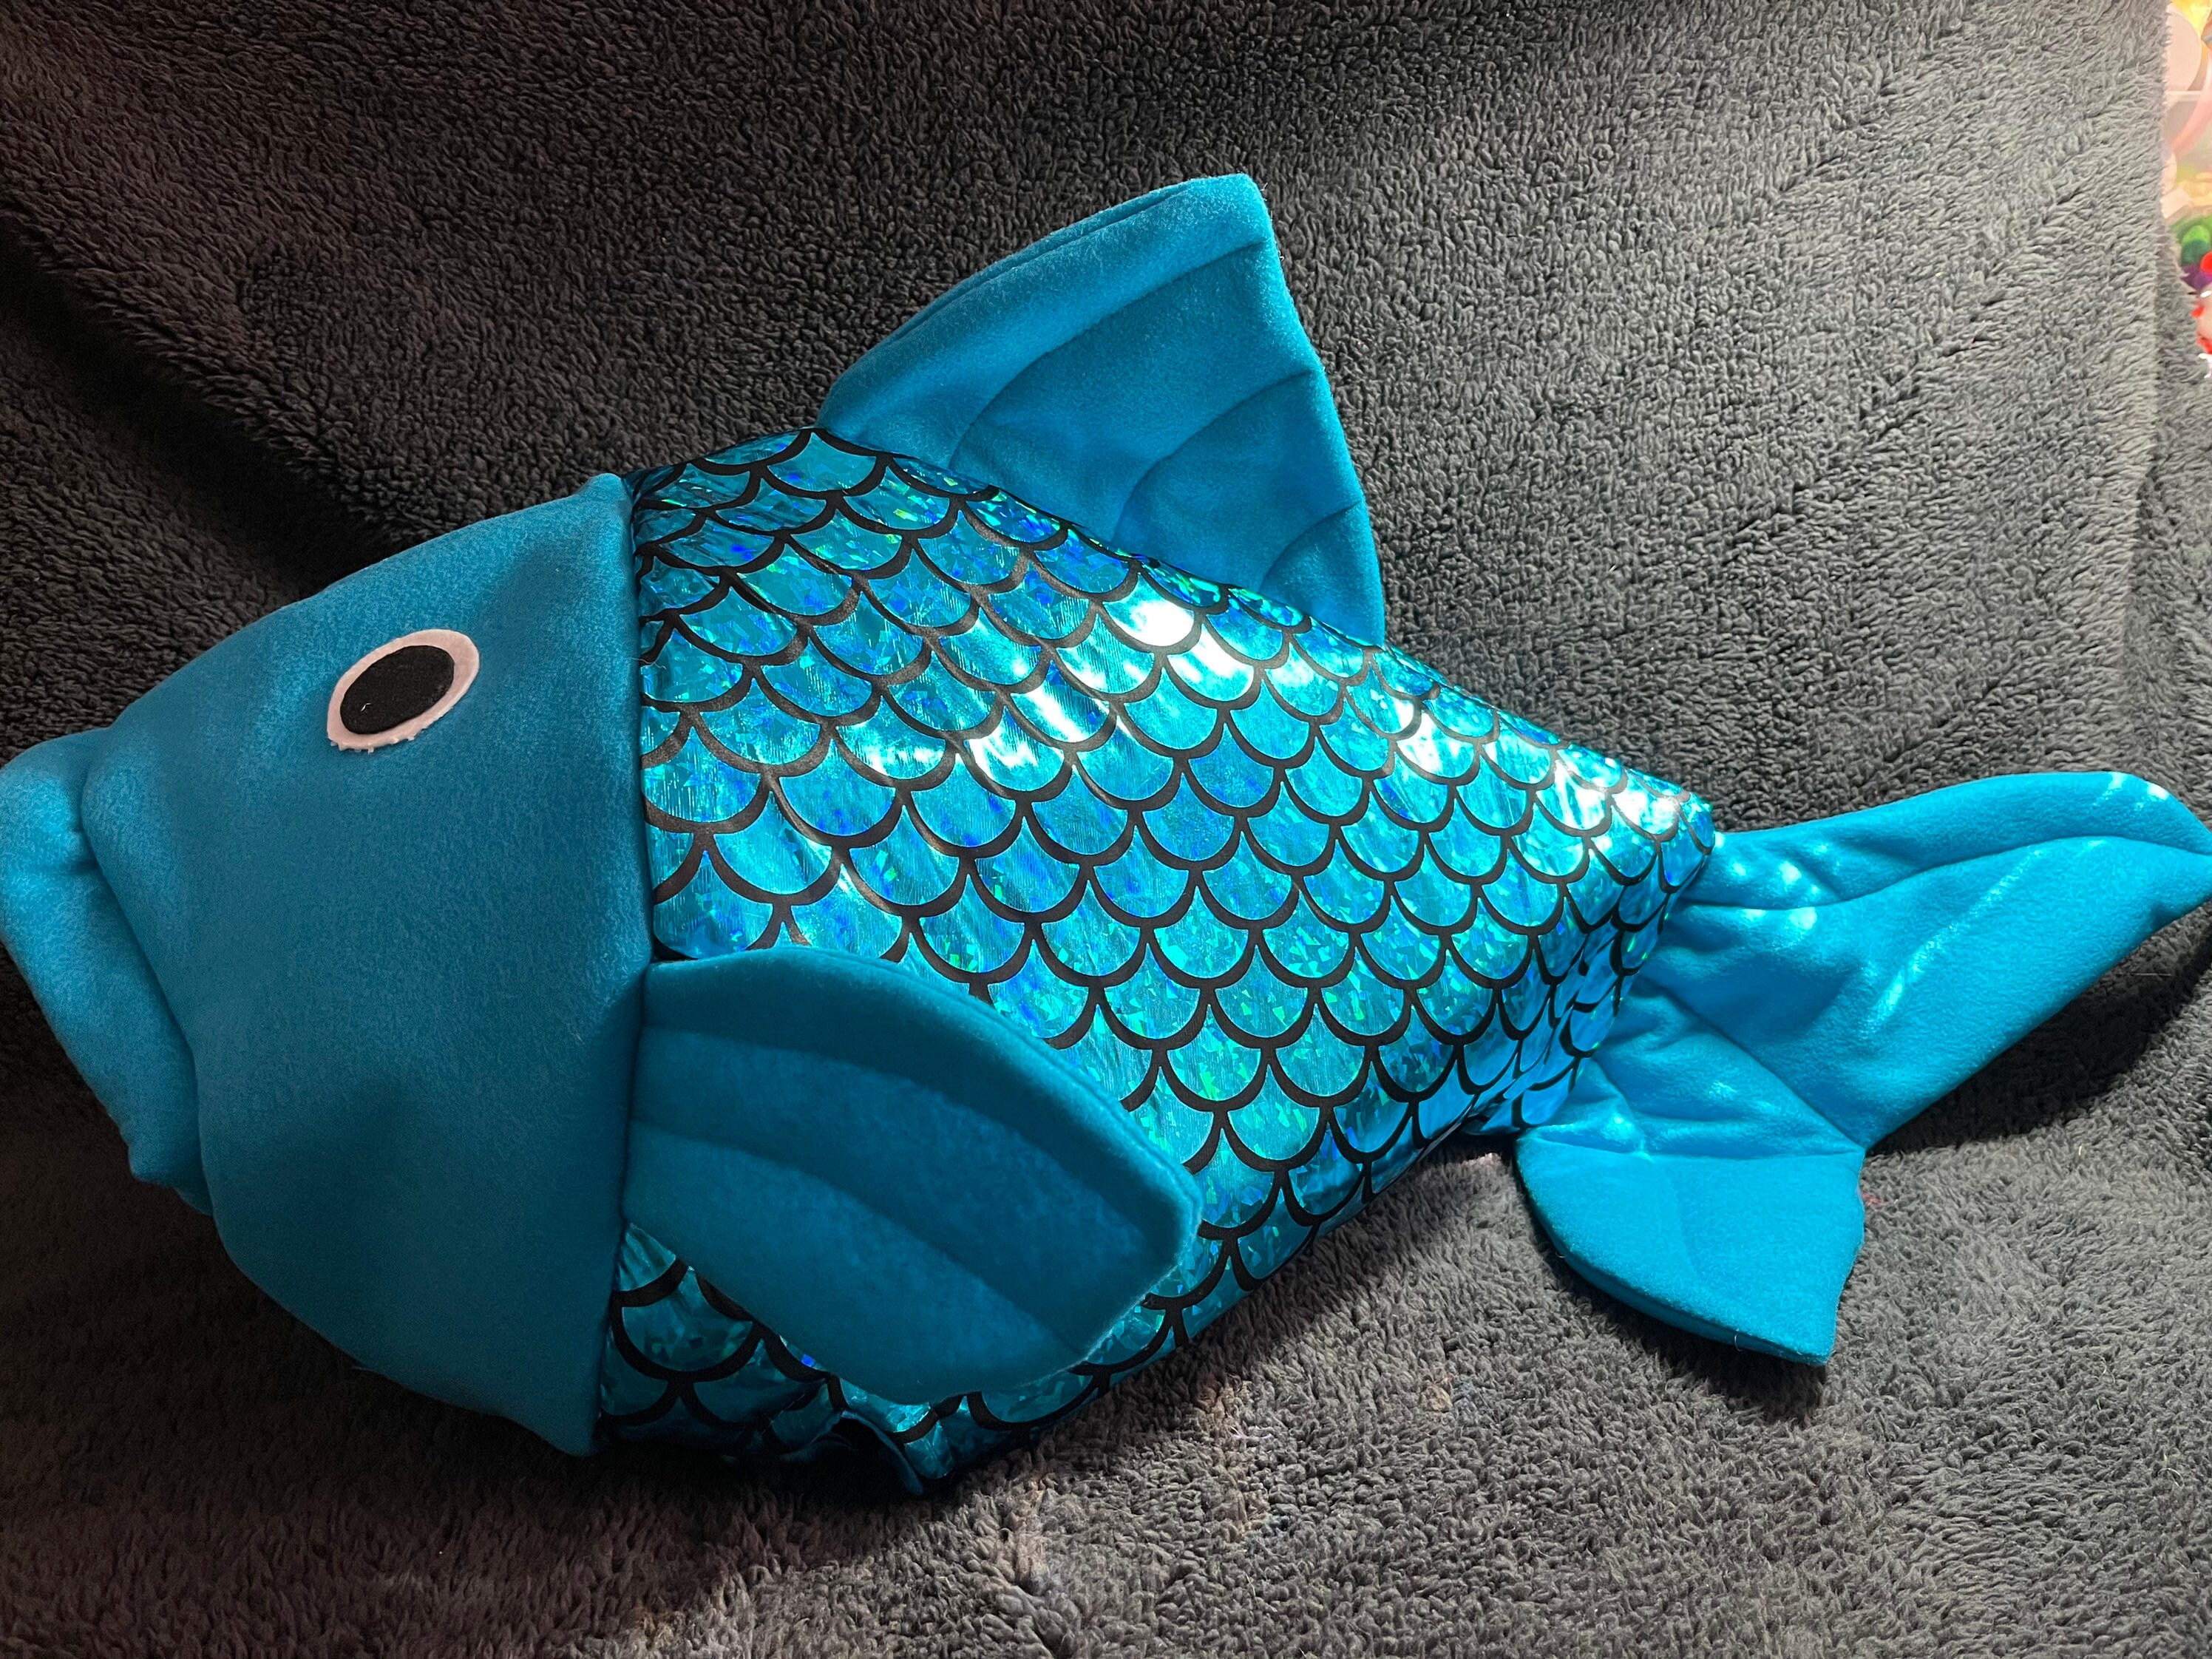 Plus Holographic Fish Scales Print Mermaid Hem Maxi Dress